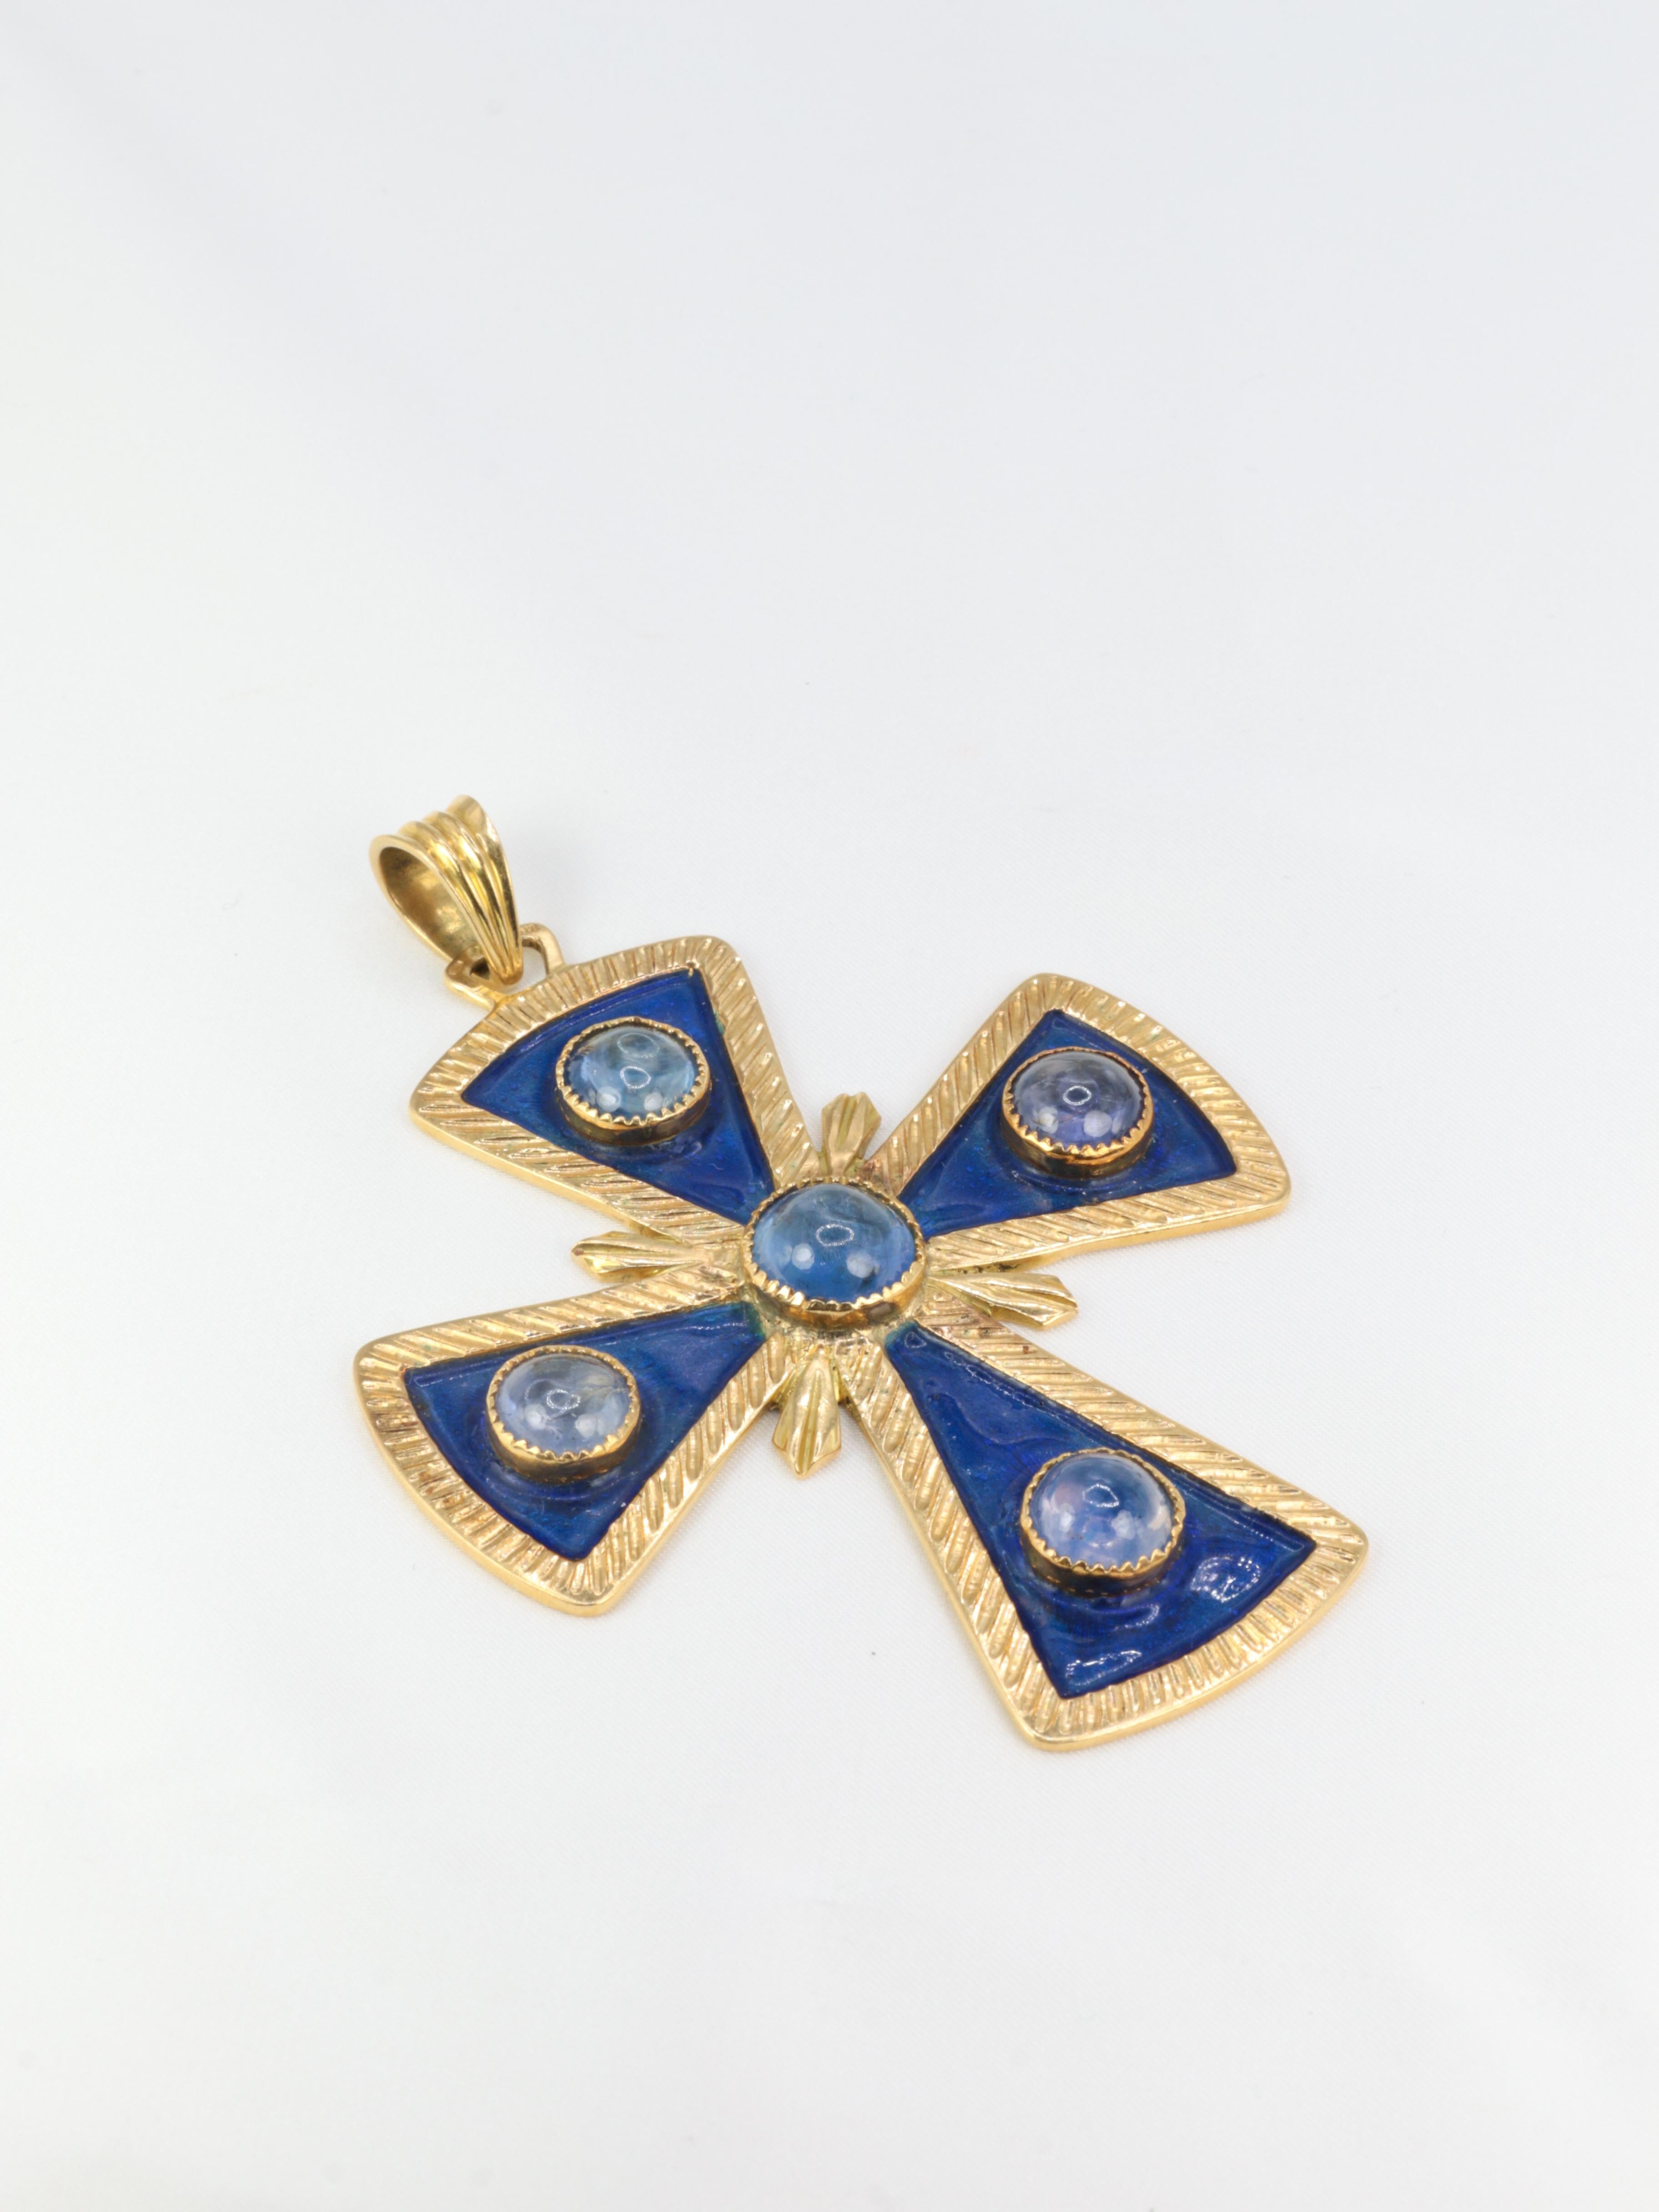 Women's or Men's Vintage Gold, Enamel and Sapphire Pectoral Cross Pendant For Sale